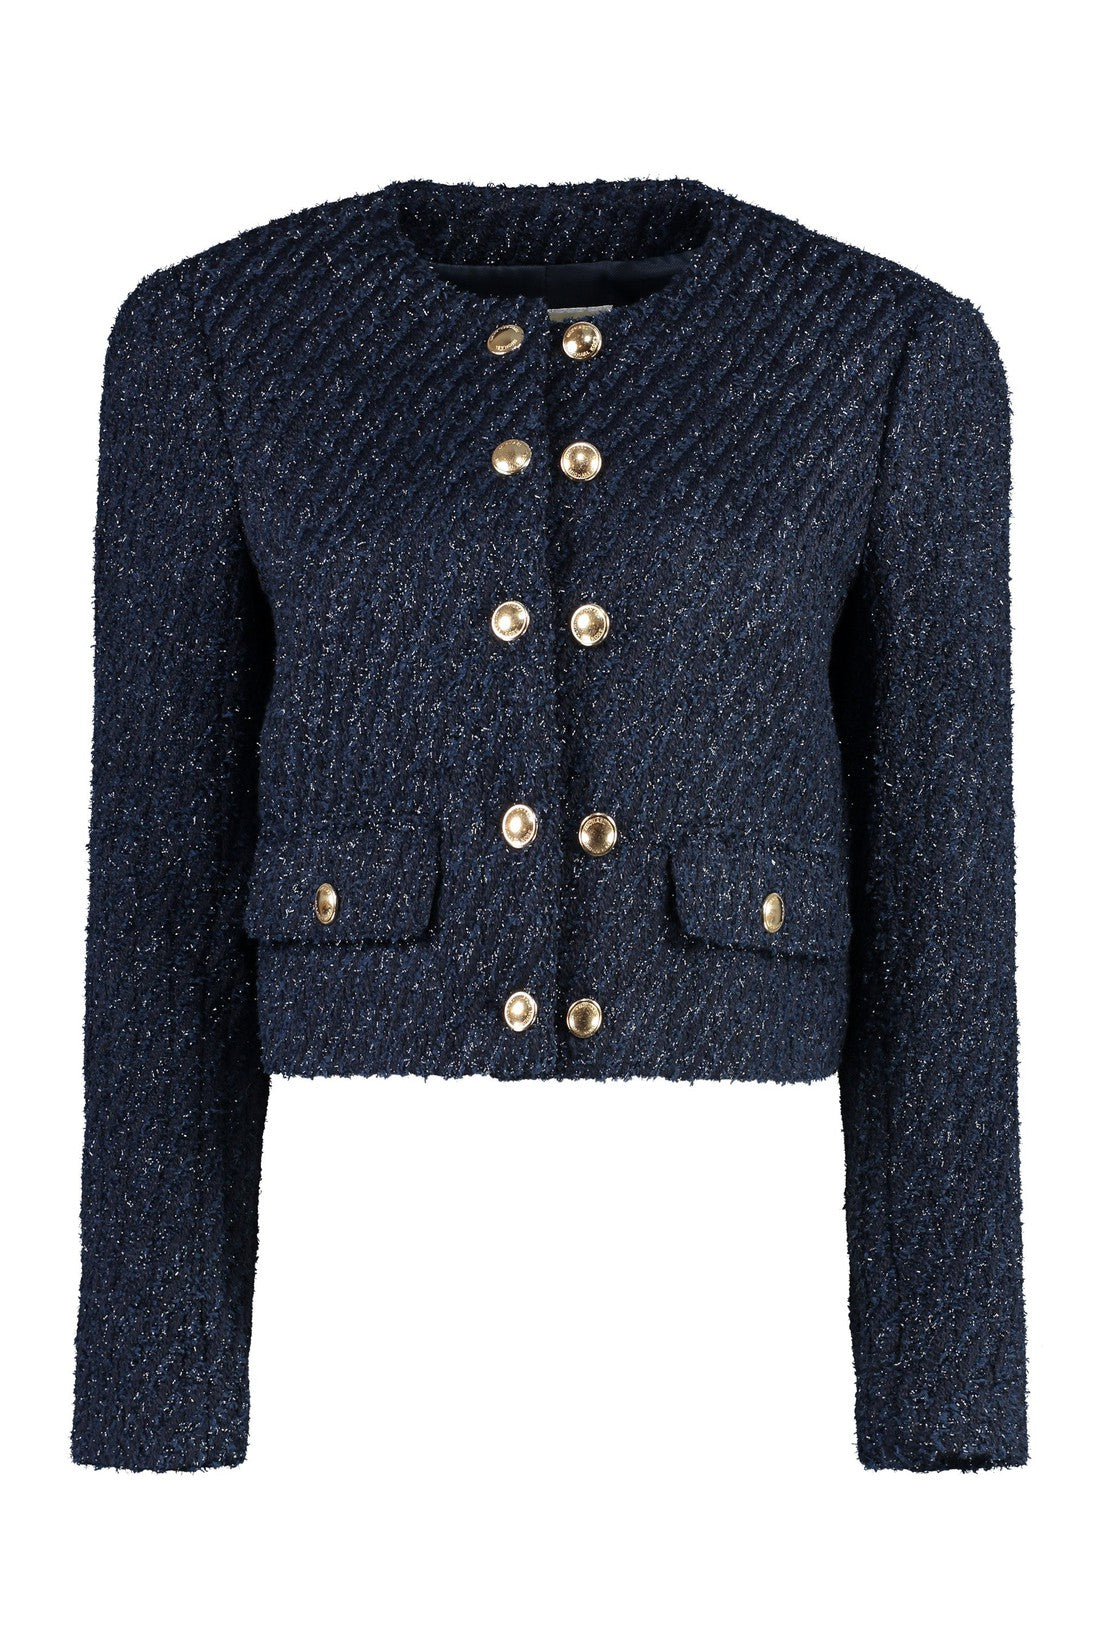 MICHAEL MICHAEL KORS-OUTLET-SALE-Knitted jacket-ARCHIVIST